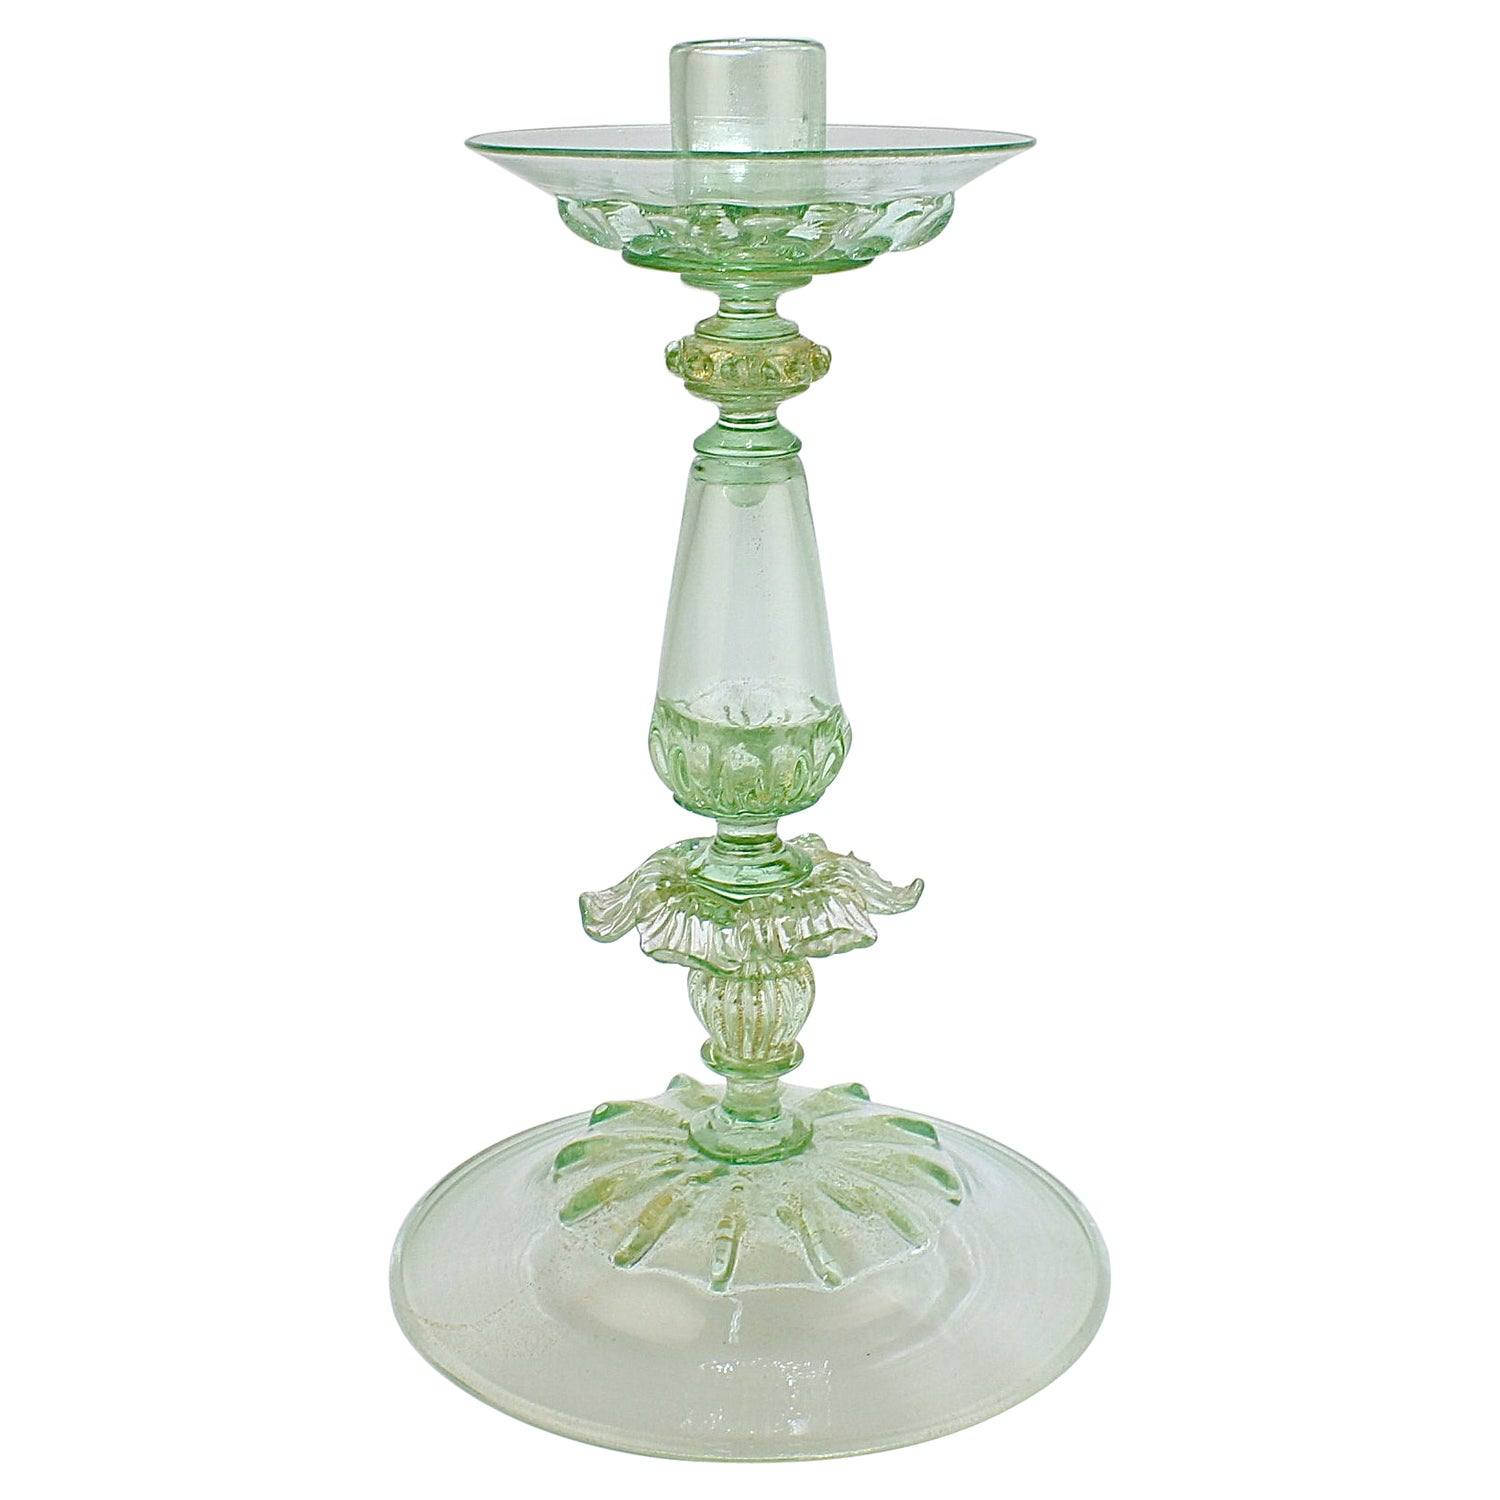 Vintage Green Glass Candlesticks - 5 For Sale on 1stDibs